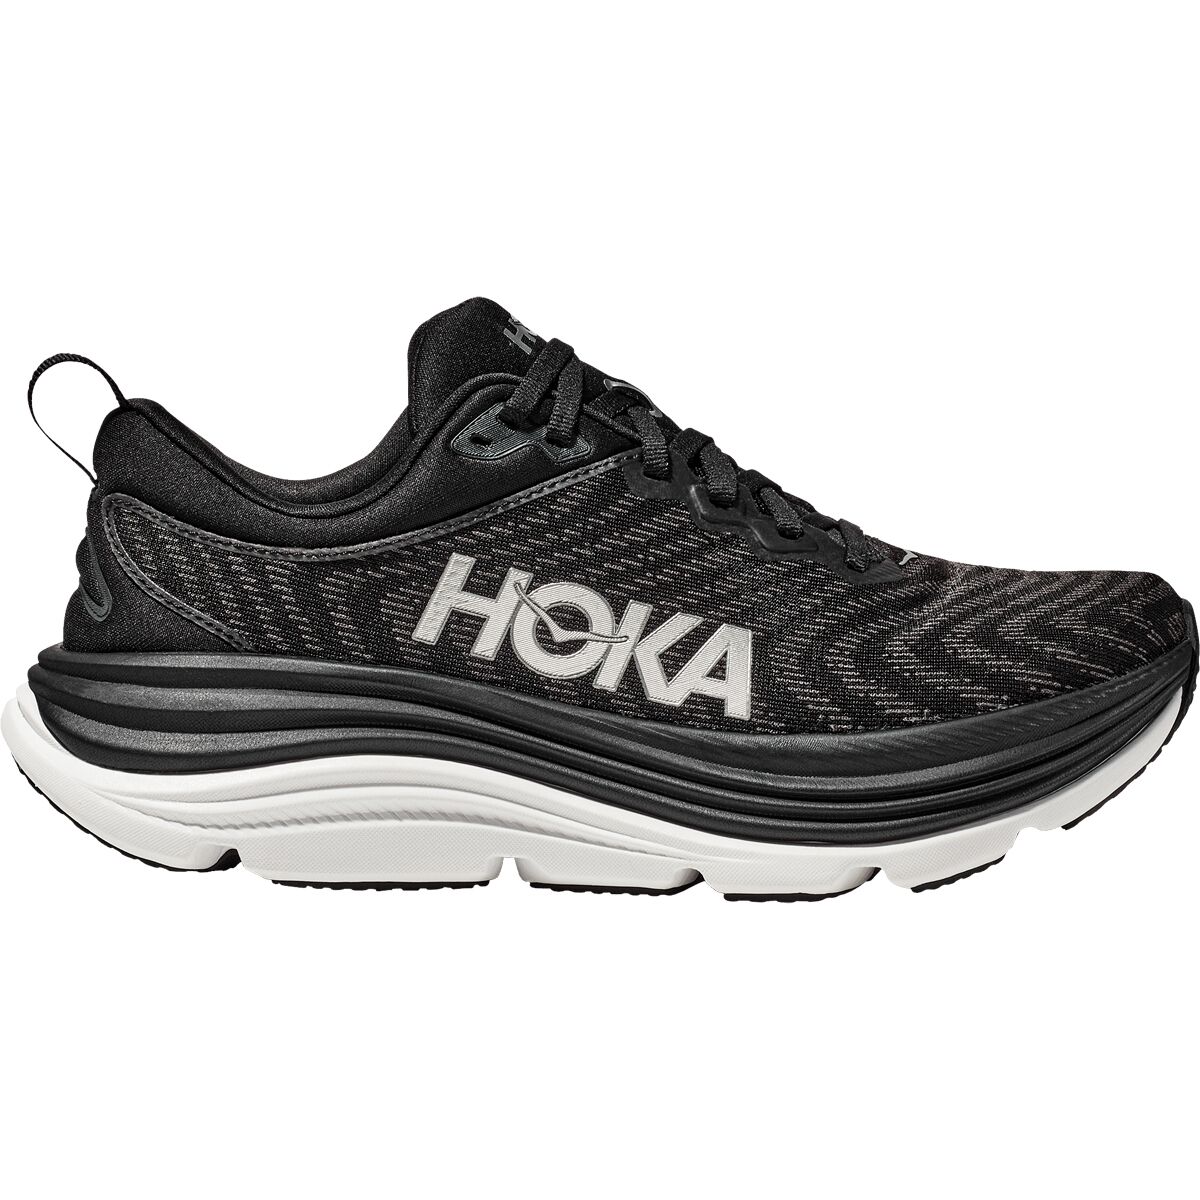 HOKA Gaviota 5 Wide Shoe - Men's